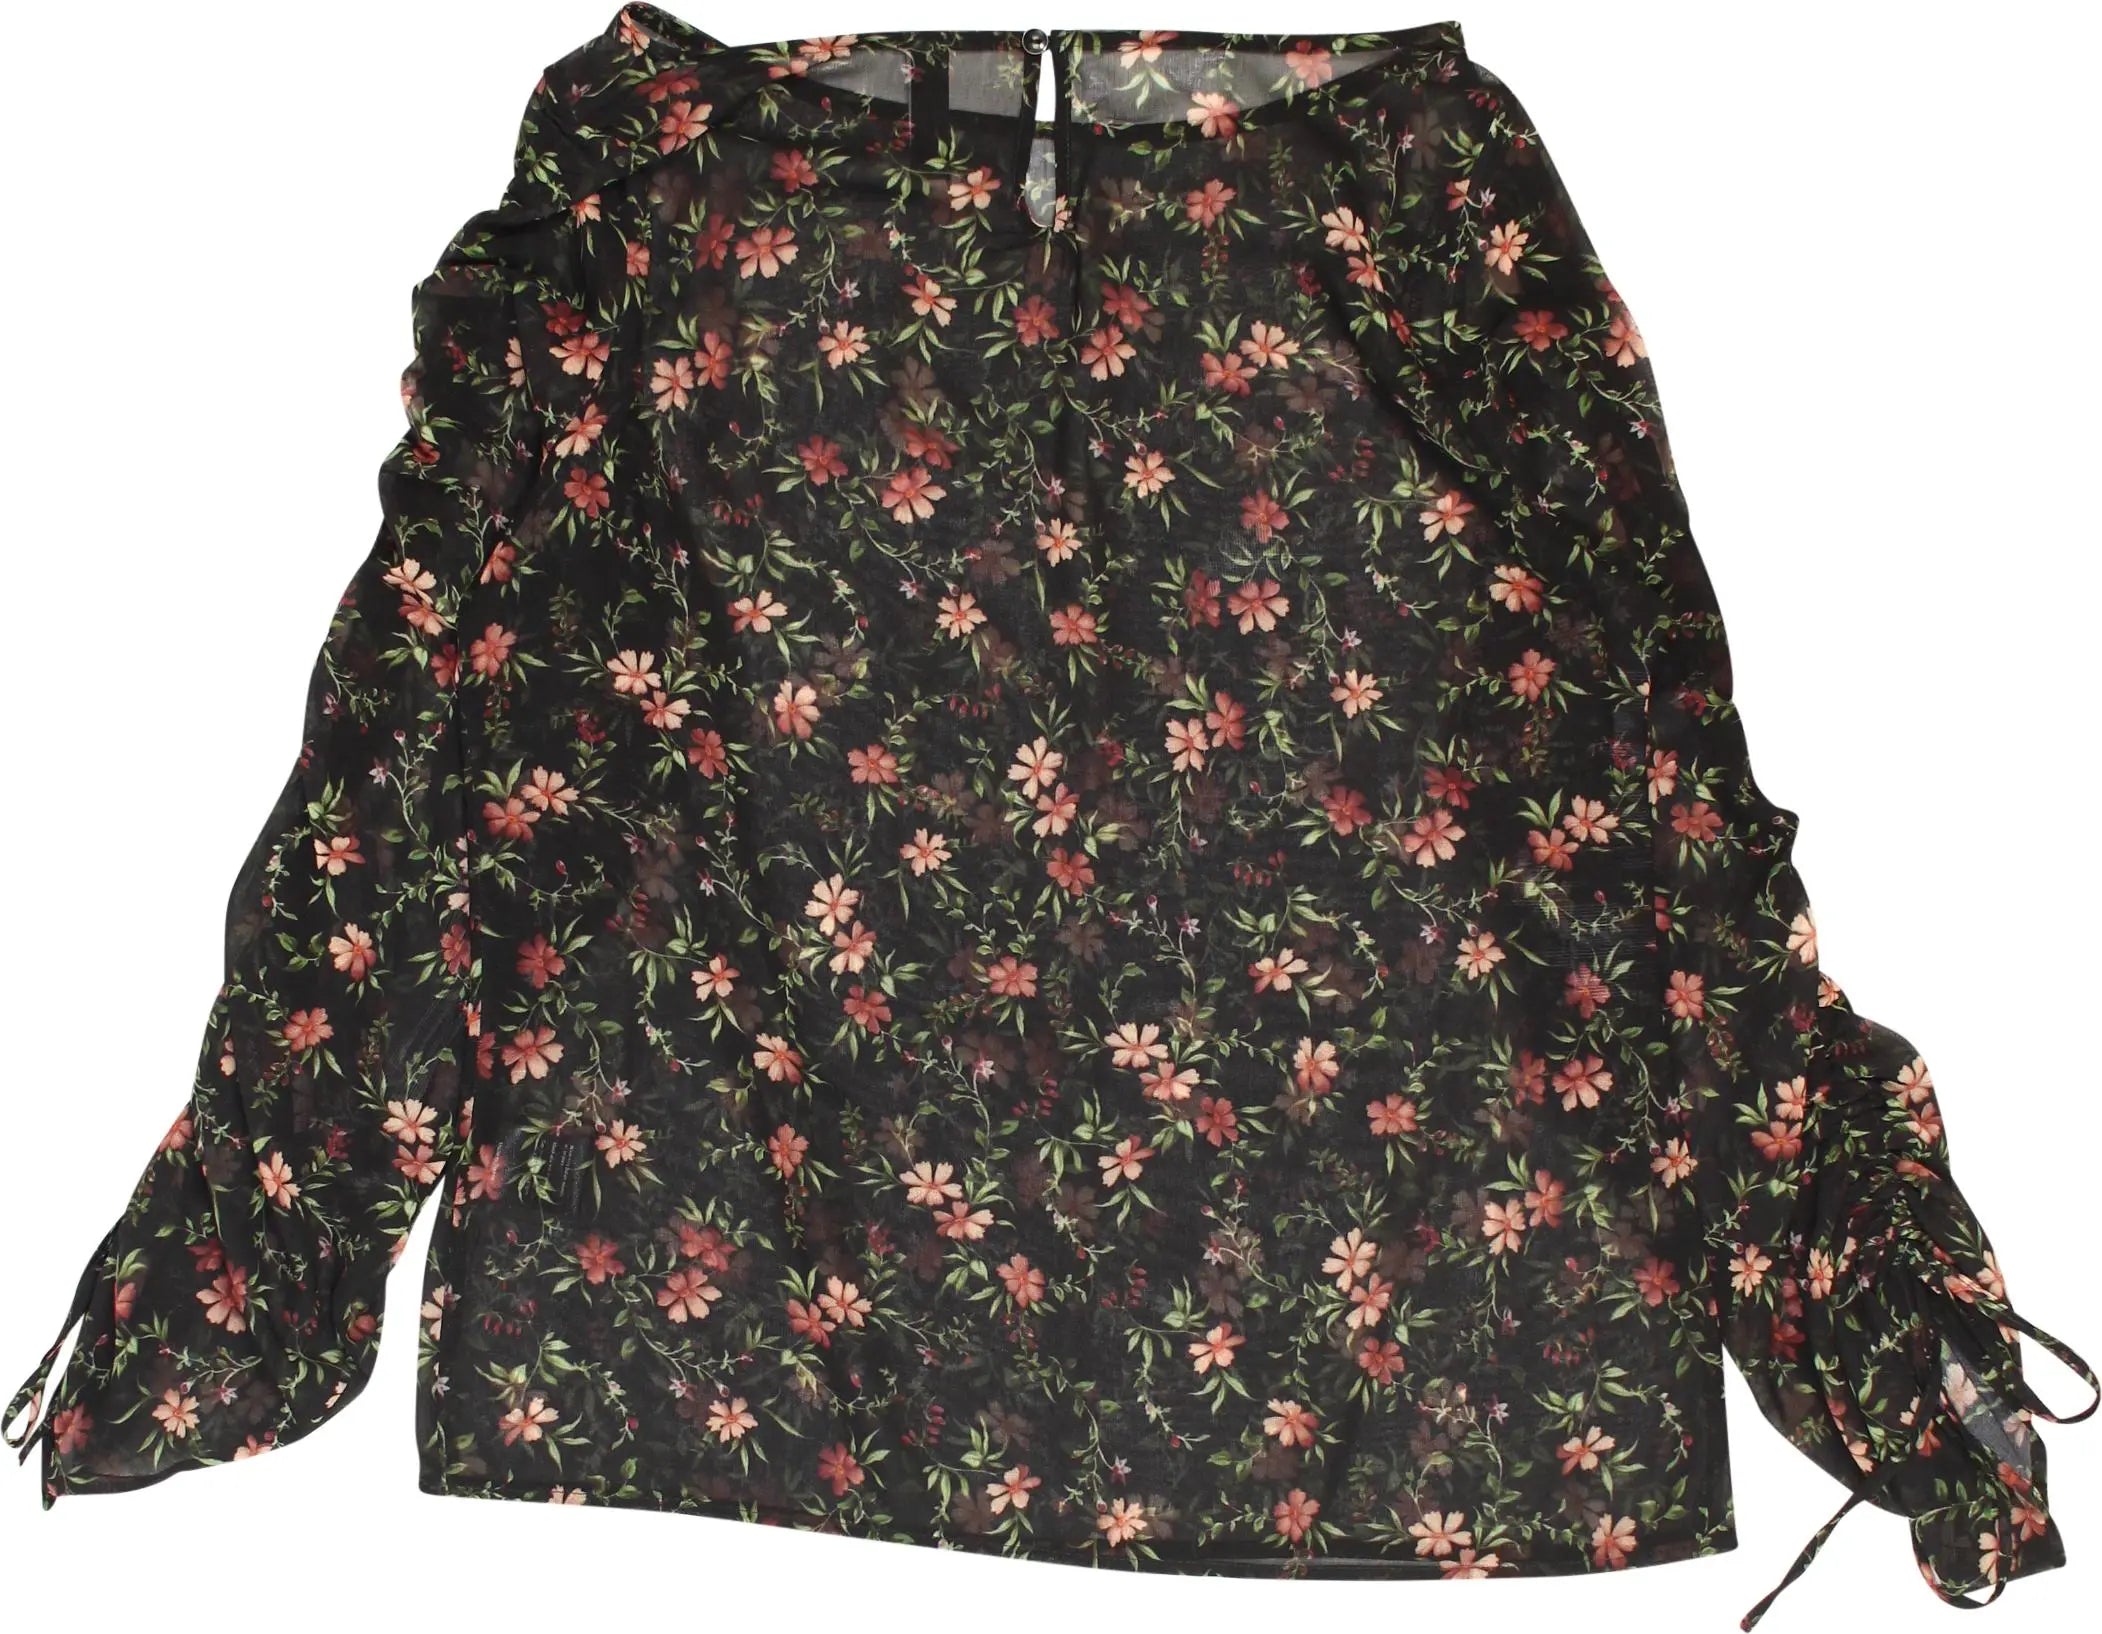 Eksept - Floral See Trough Top- ThriftTale.com - Vintage and second handclothing